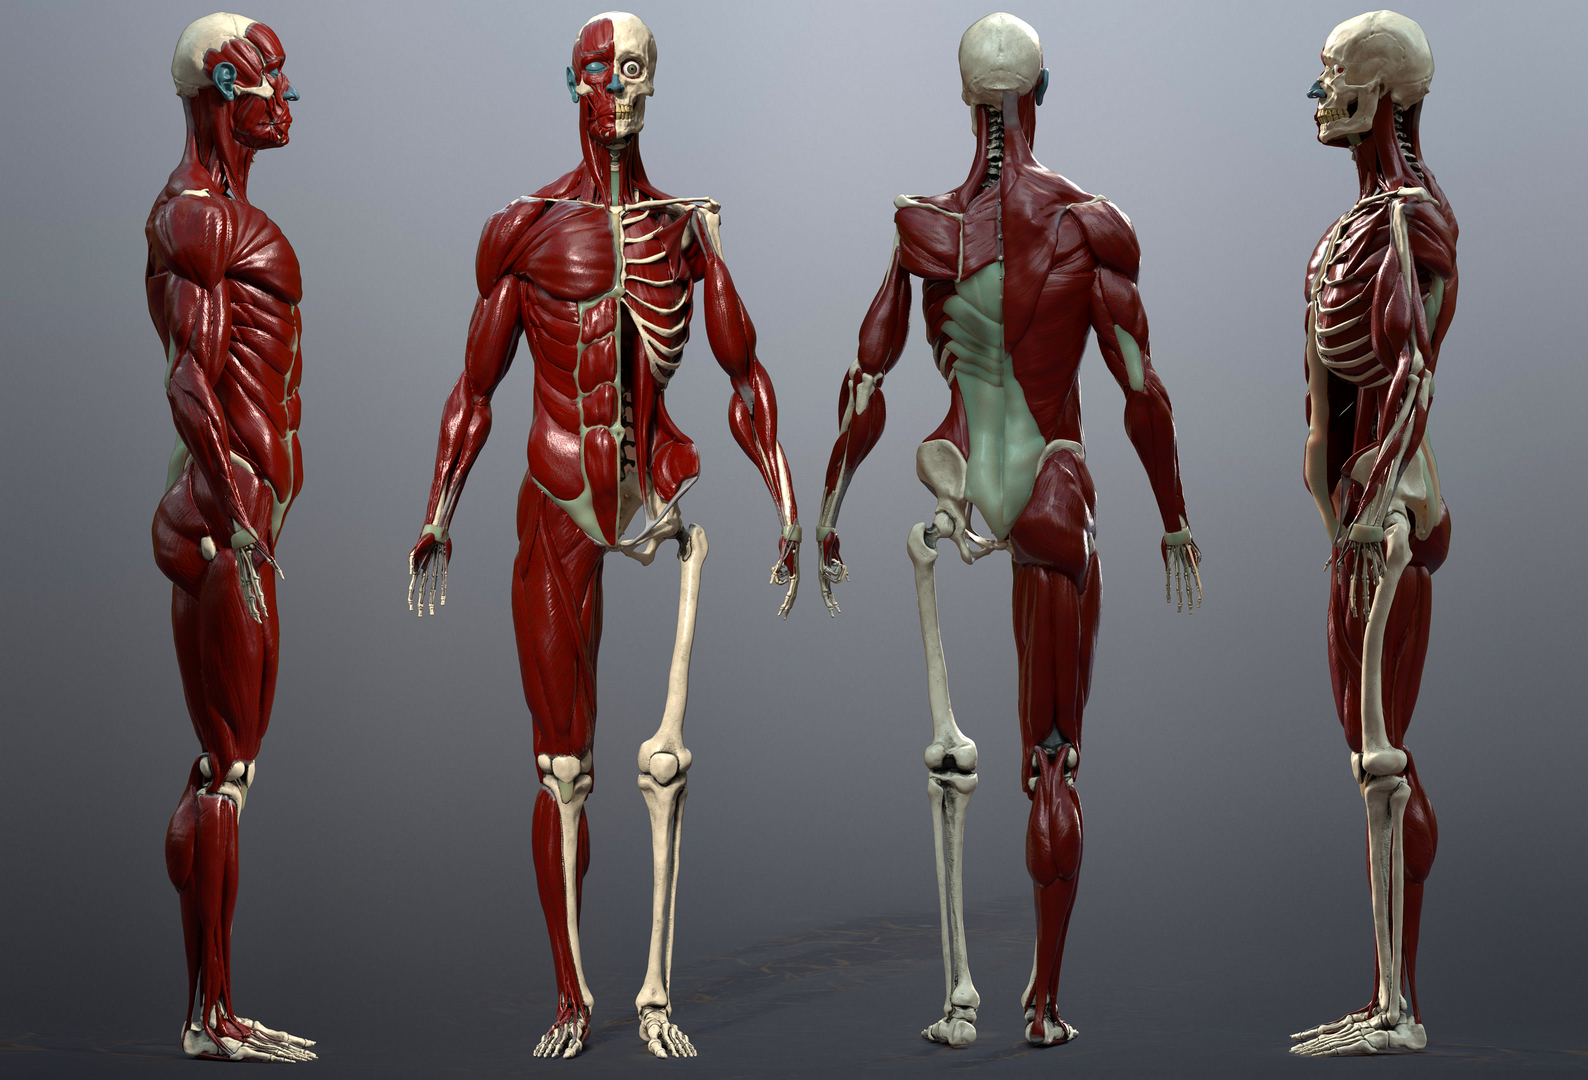 Skeleton muscles study 3D model TurboSquid 1532554